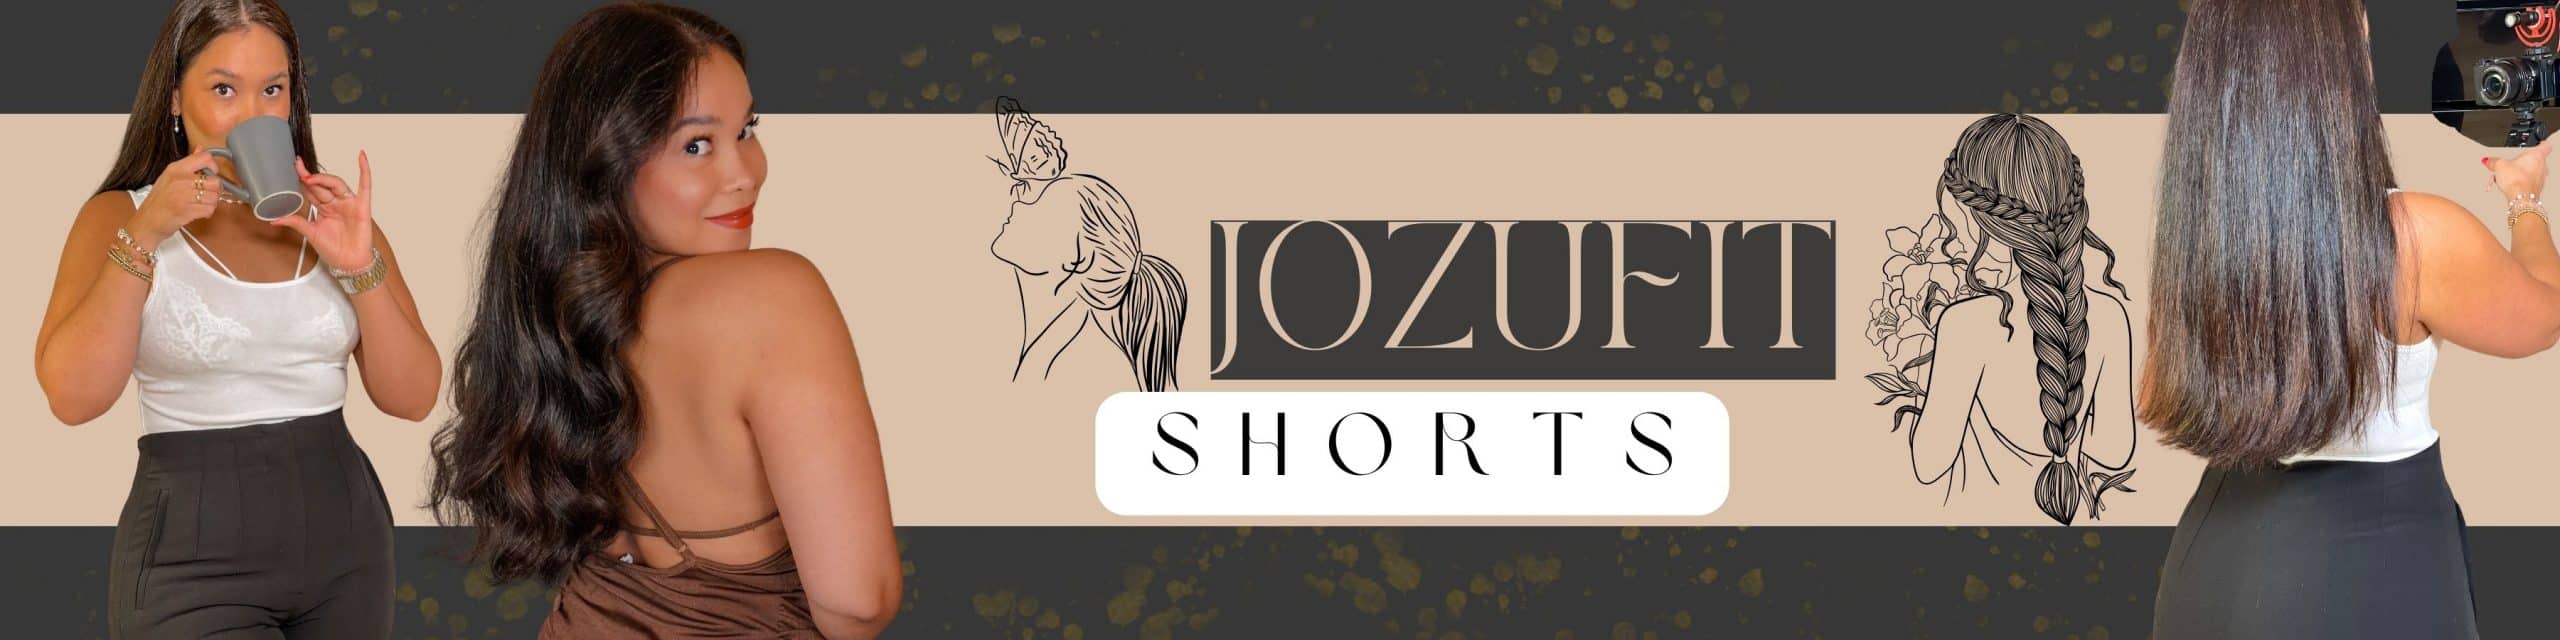 jozufit shorts bücher fitness ernährung beauty makeup lettering